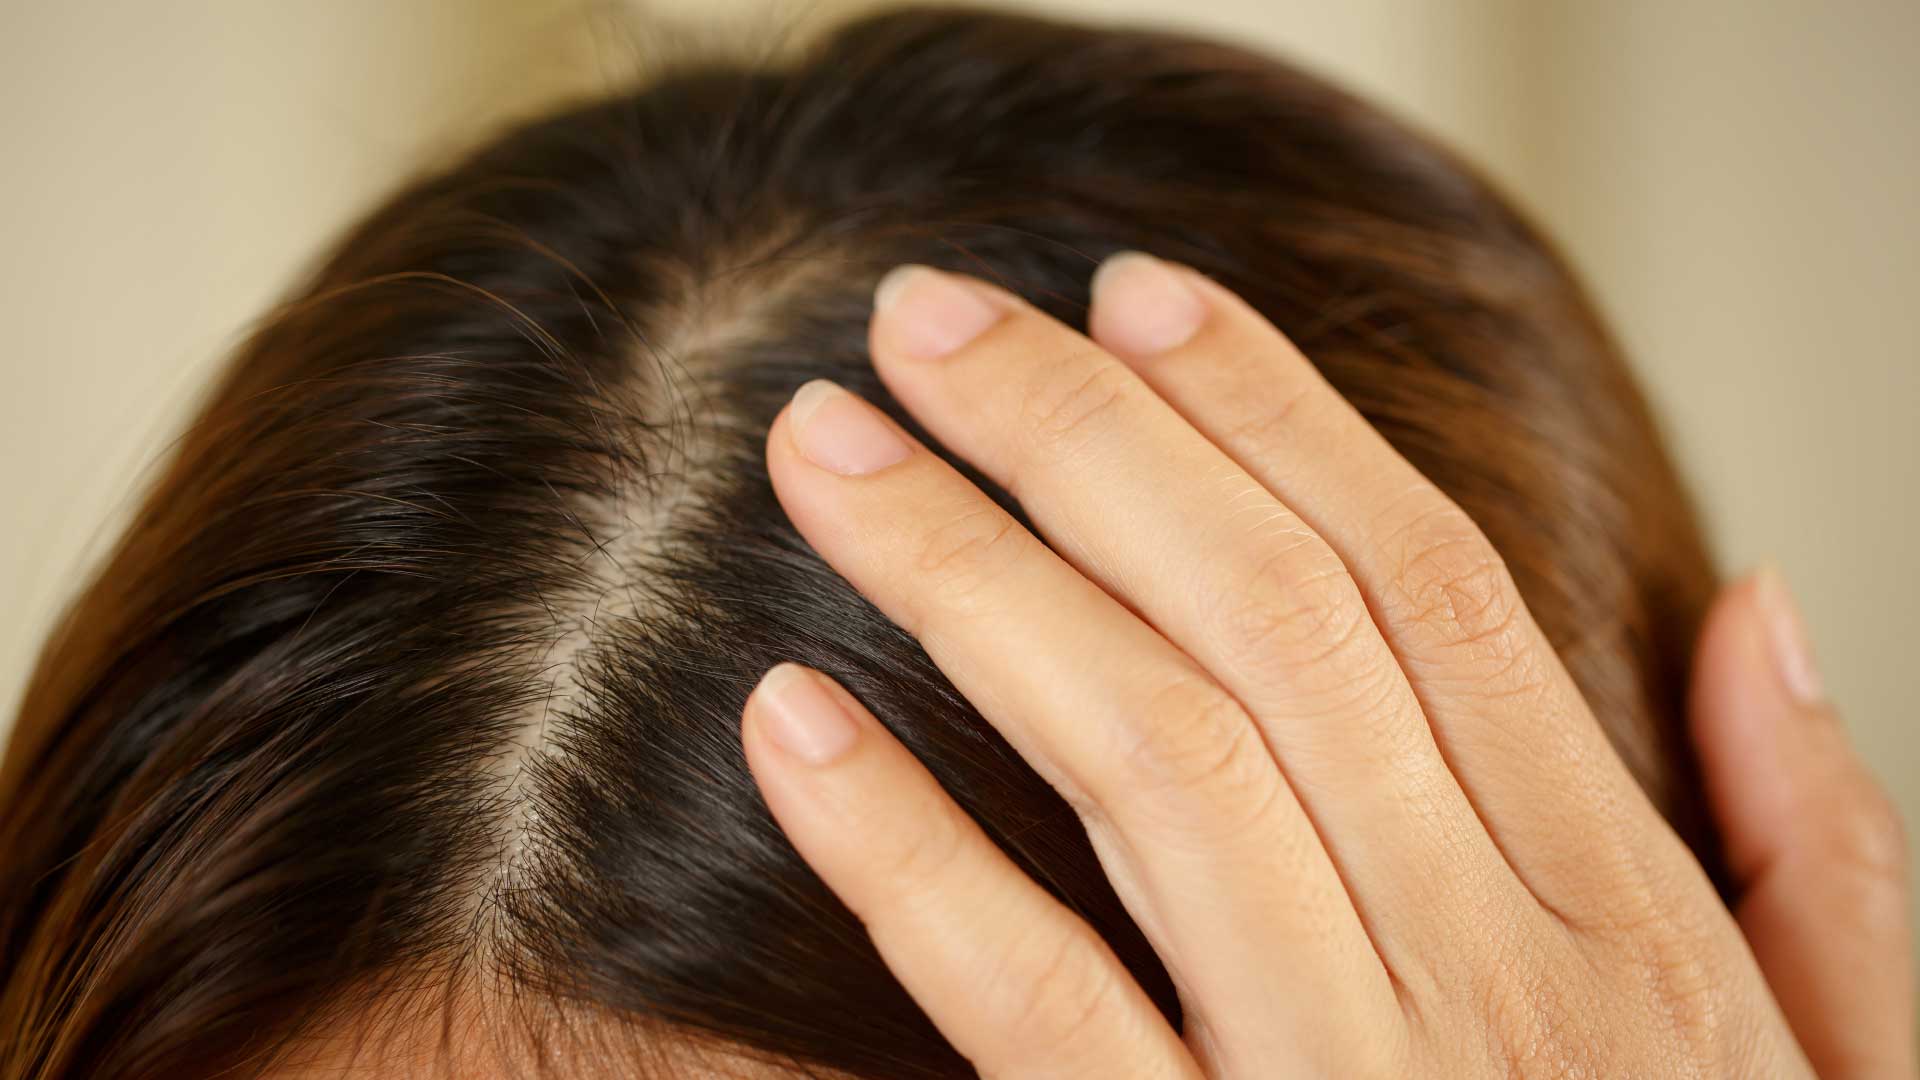 LOREAL HAIR SPA AT HOME |Anti Dandruff Treatment |TAMIL - YouTube